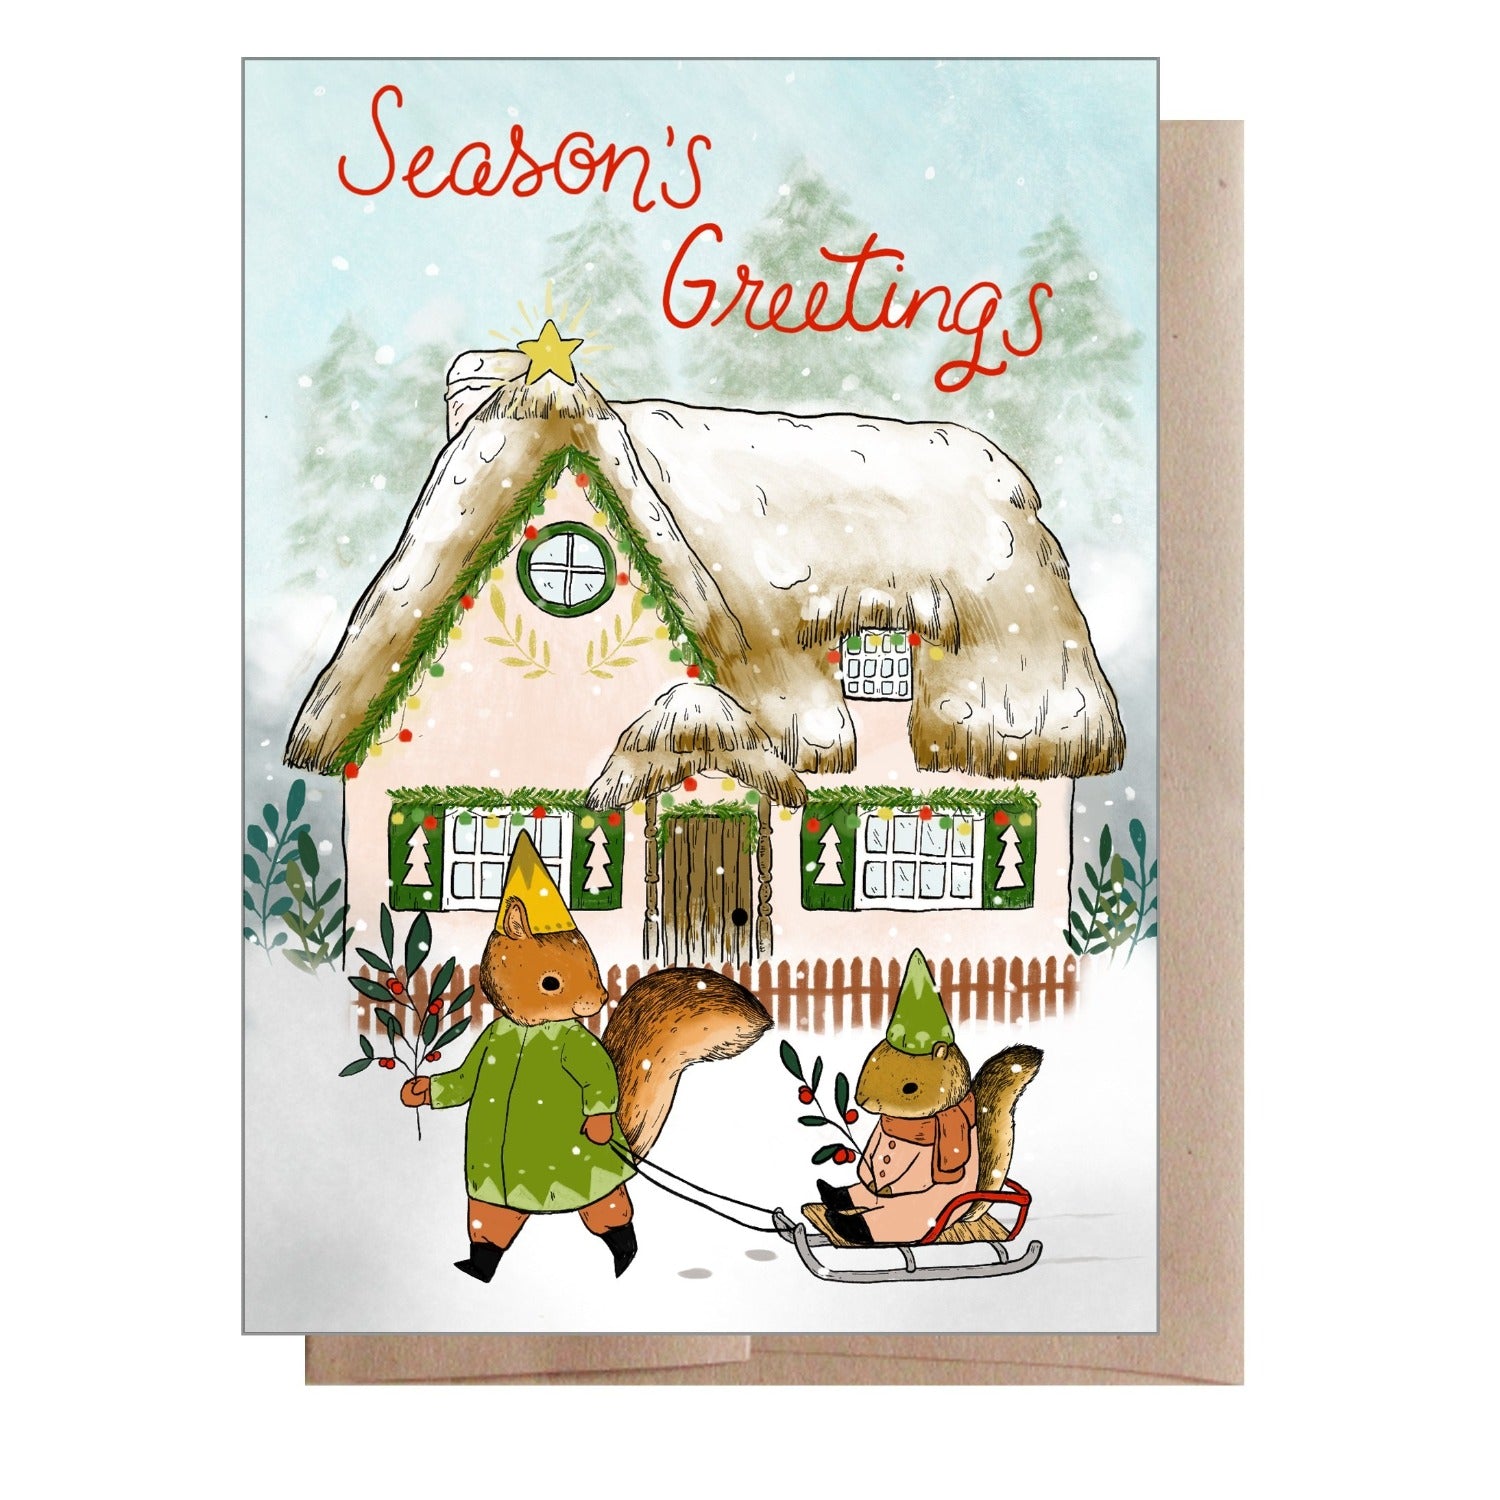 Season’s Greetings Holiday Card